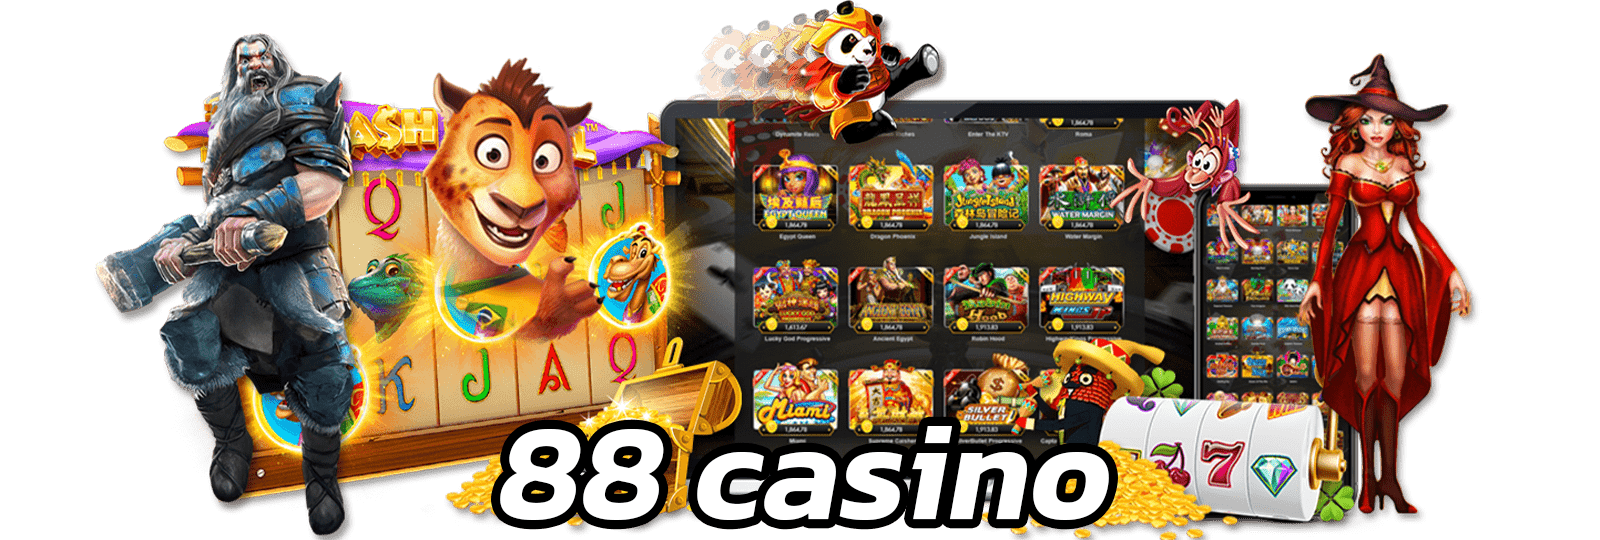 247 casino spin